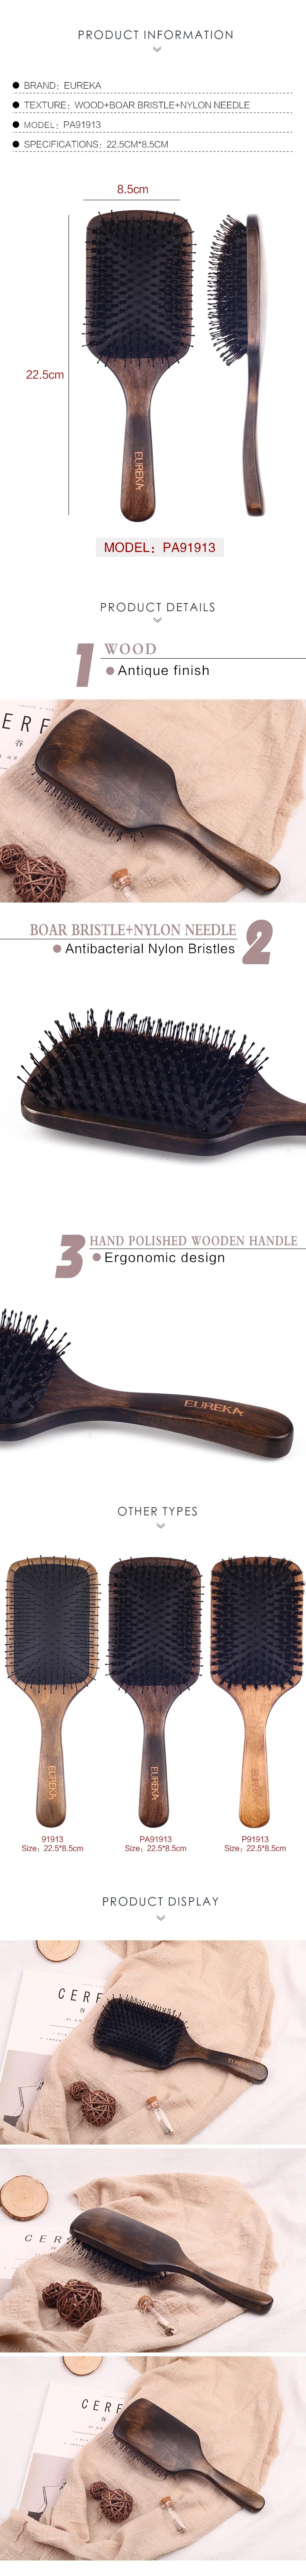 EUREKA PA91912 Engraved Wooden Nylon Pins Hair Brush Wood Hair Brush Massage Classical Style Hair Brush